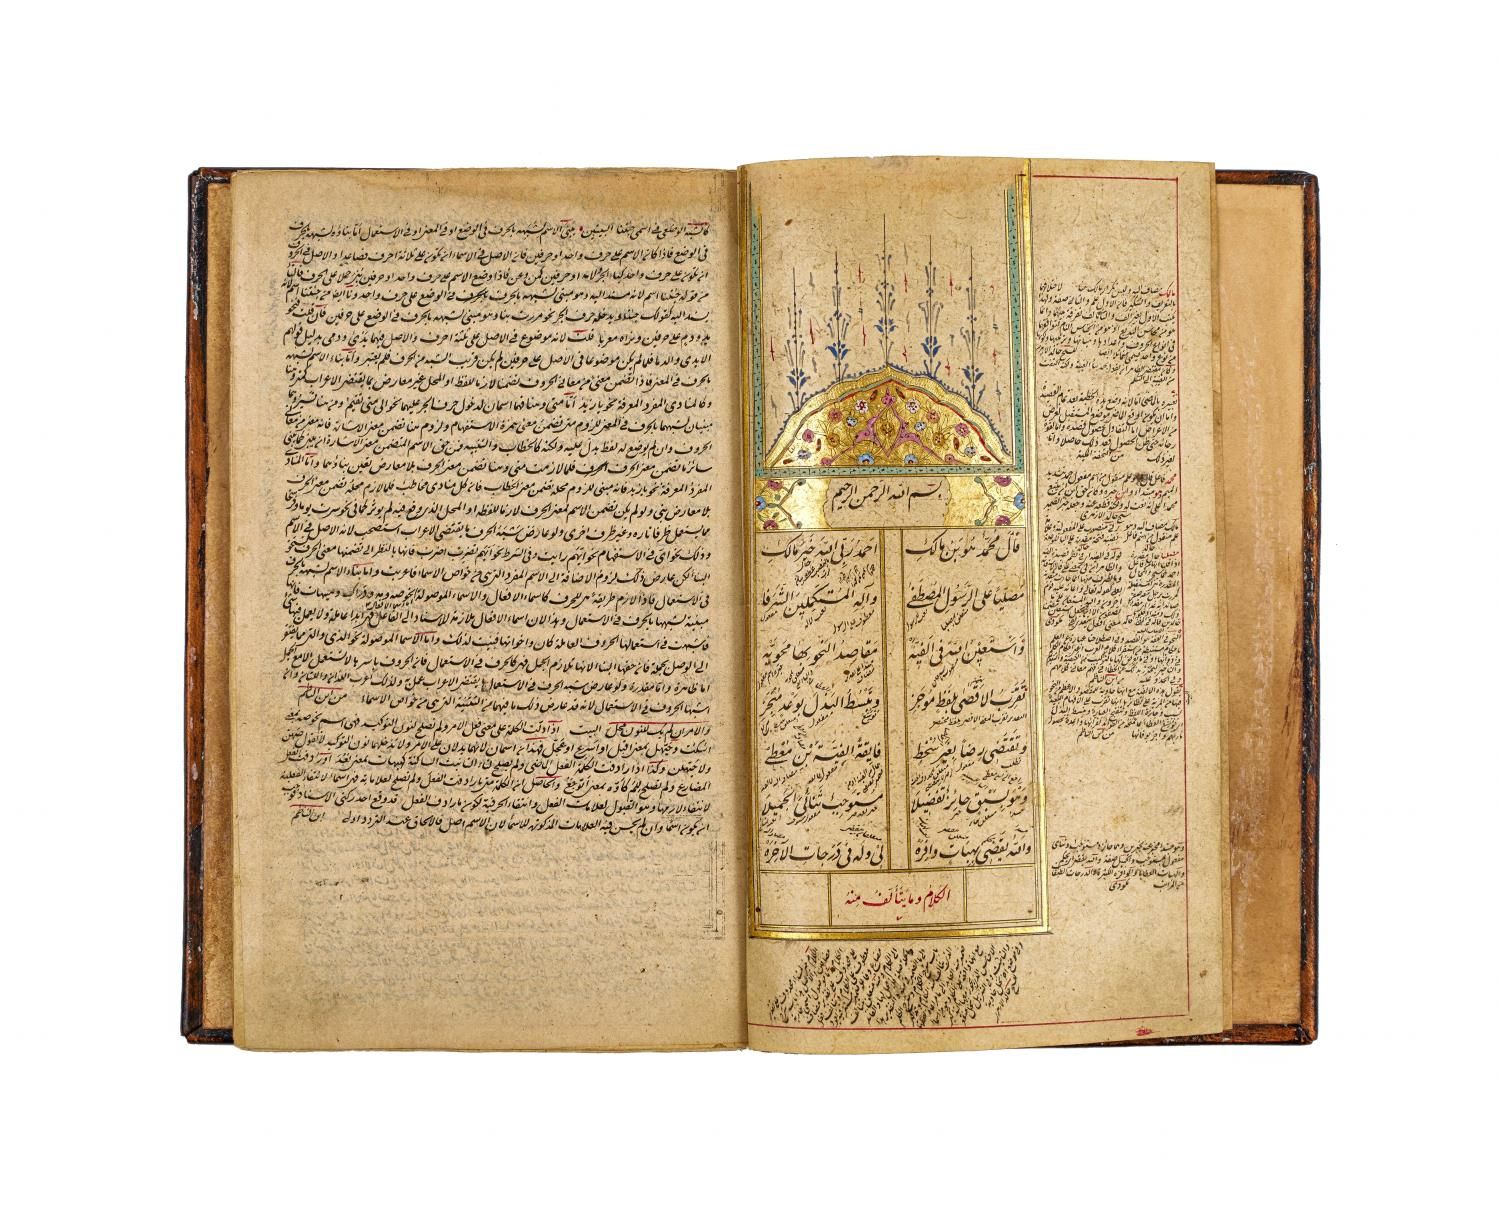 AL-ALFIYYAH IN ARABIC GRAMMER, COMPLIED BY IMAM JAMAL AL-DIN ABI ABDULLAH MUHAMM&hellip;